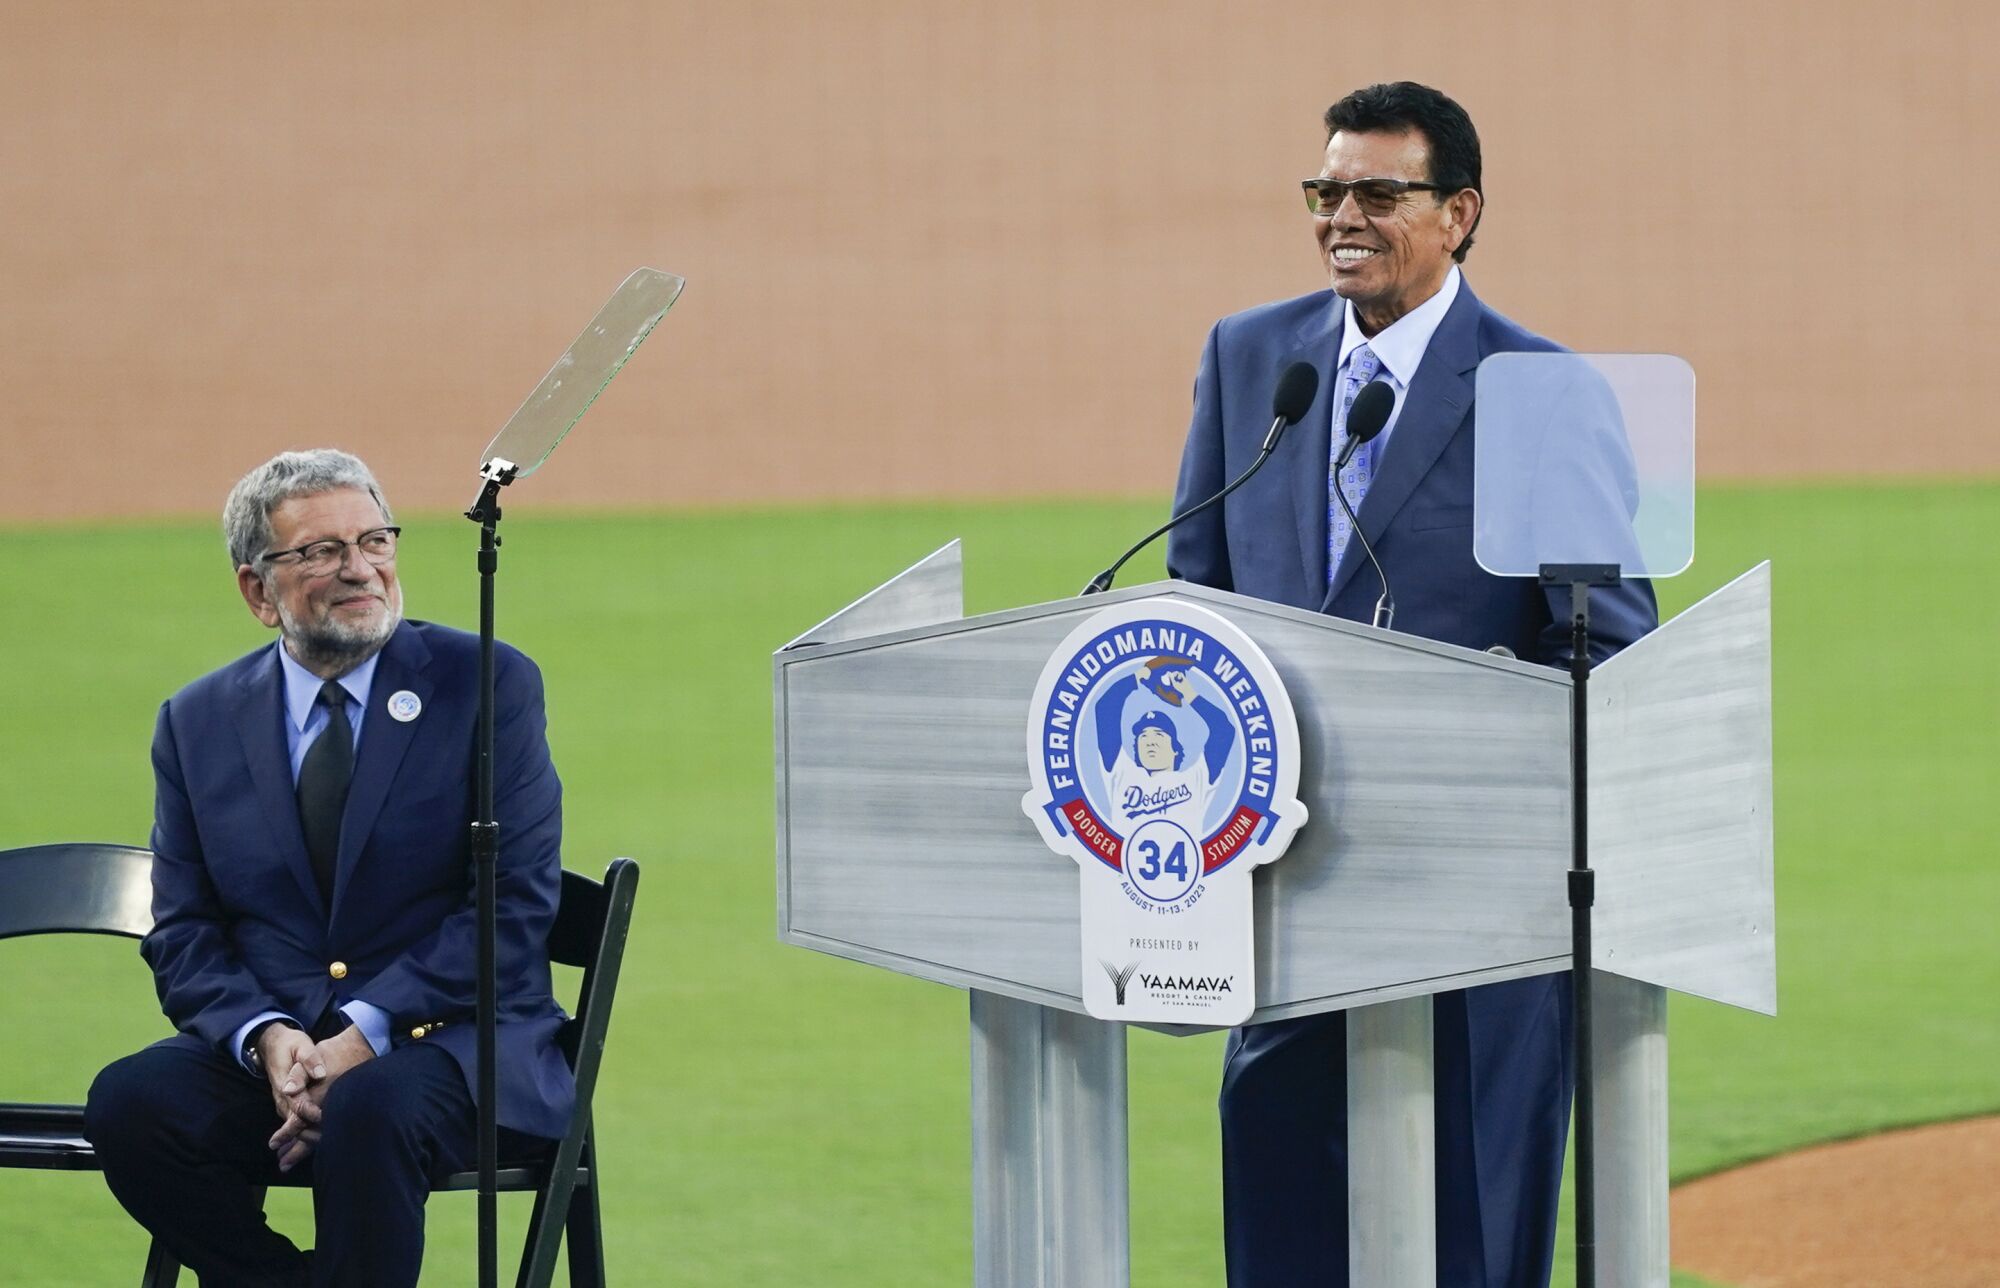 Charley Steiner looks on as Fernando Valenzuela speaks during his number retirement ceremony at Dodger Stadium.